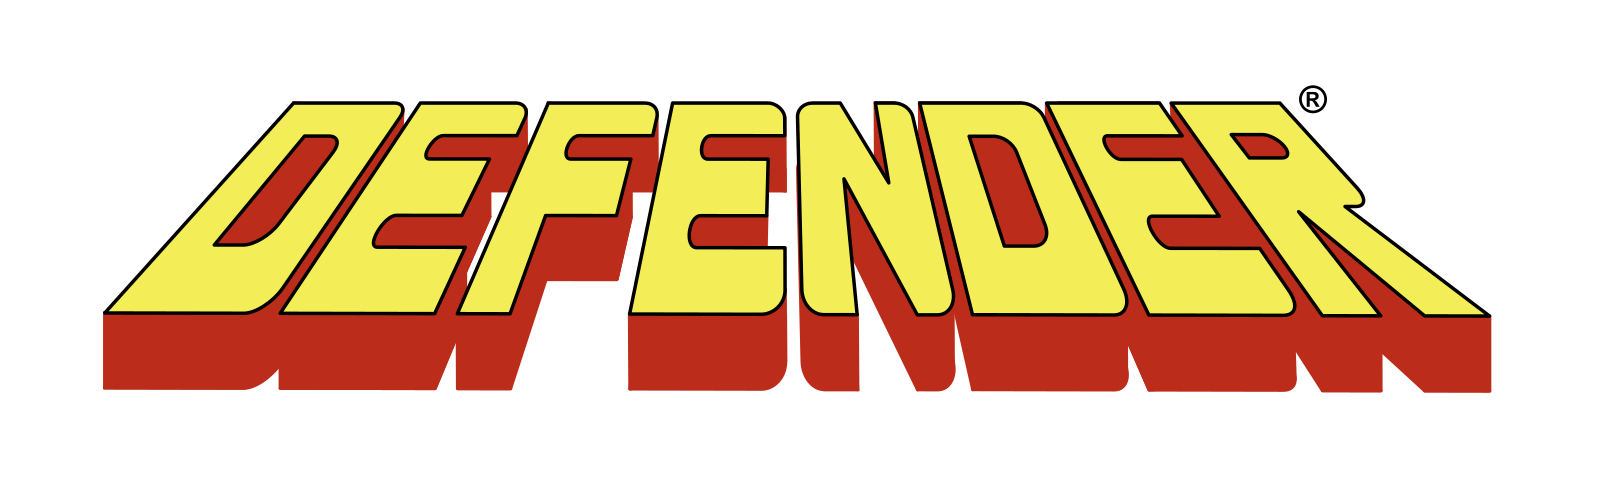 File defender. Дефендер лого. Логотип Дефендер игровой. Эльдорадо логотип. Defender logo vector шрифт.